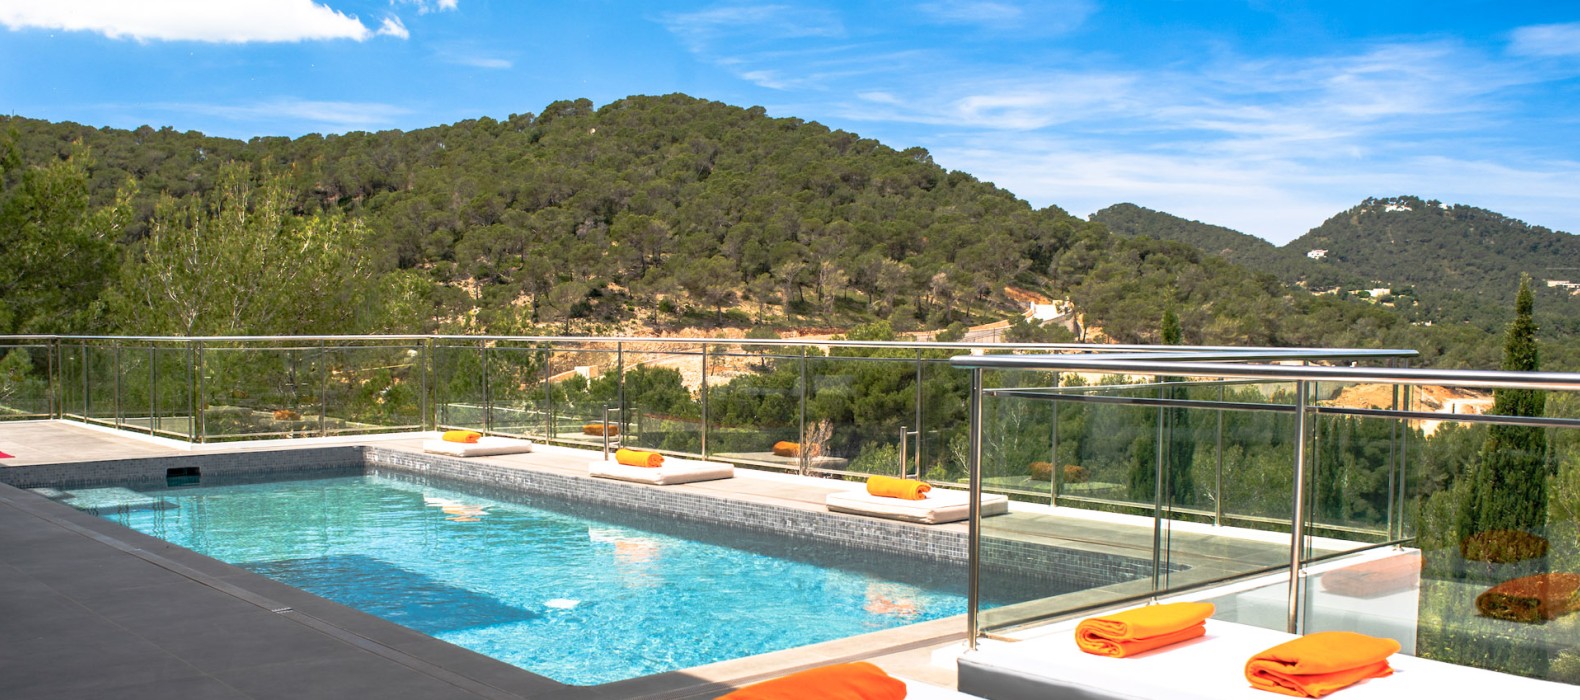 Pool area of Villa Miragon in Ibiza